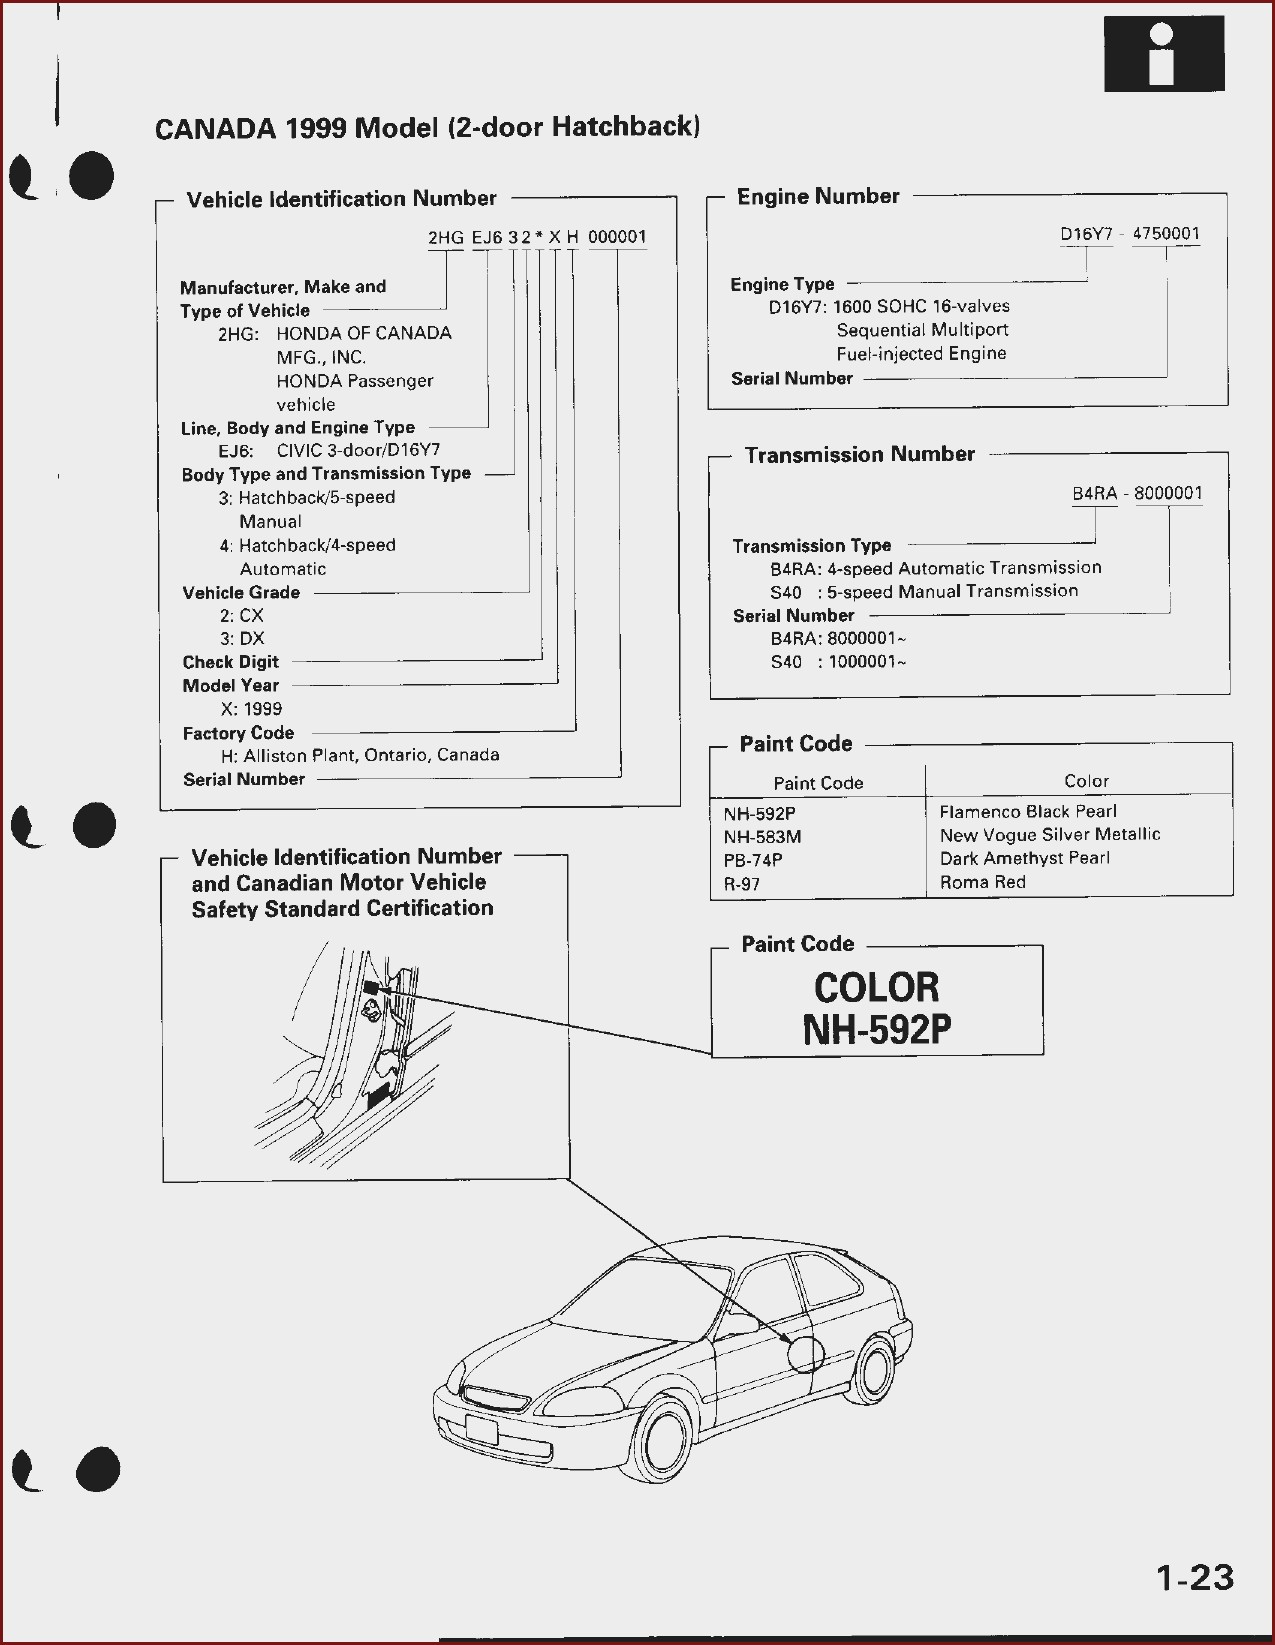 1999 Honda Civic Engine Diagram 2013 Honda Civic Service Manual Pdf at Manuals Library Of 1999 Honda Civic Engine Diagram